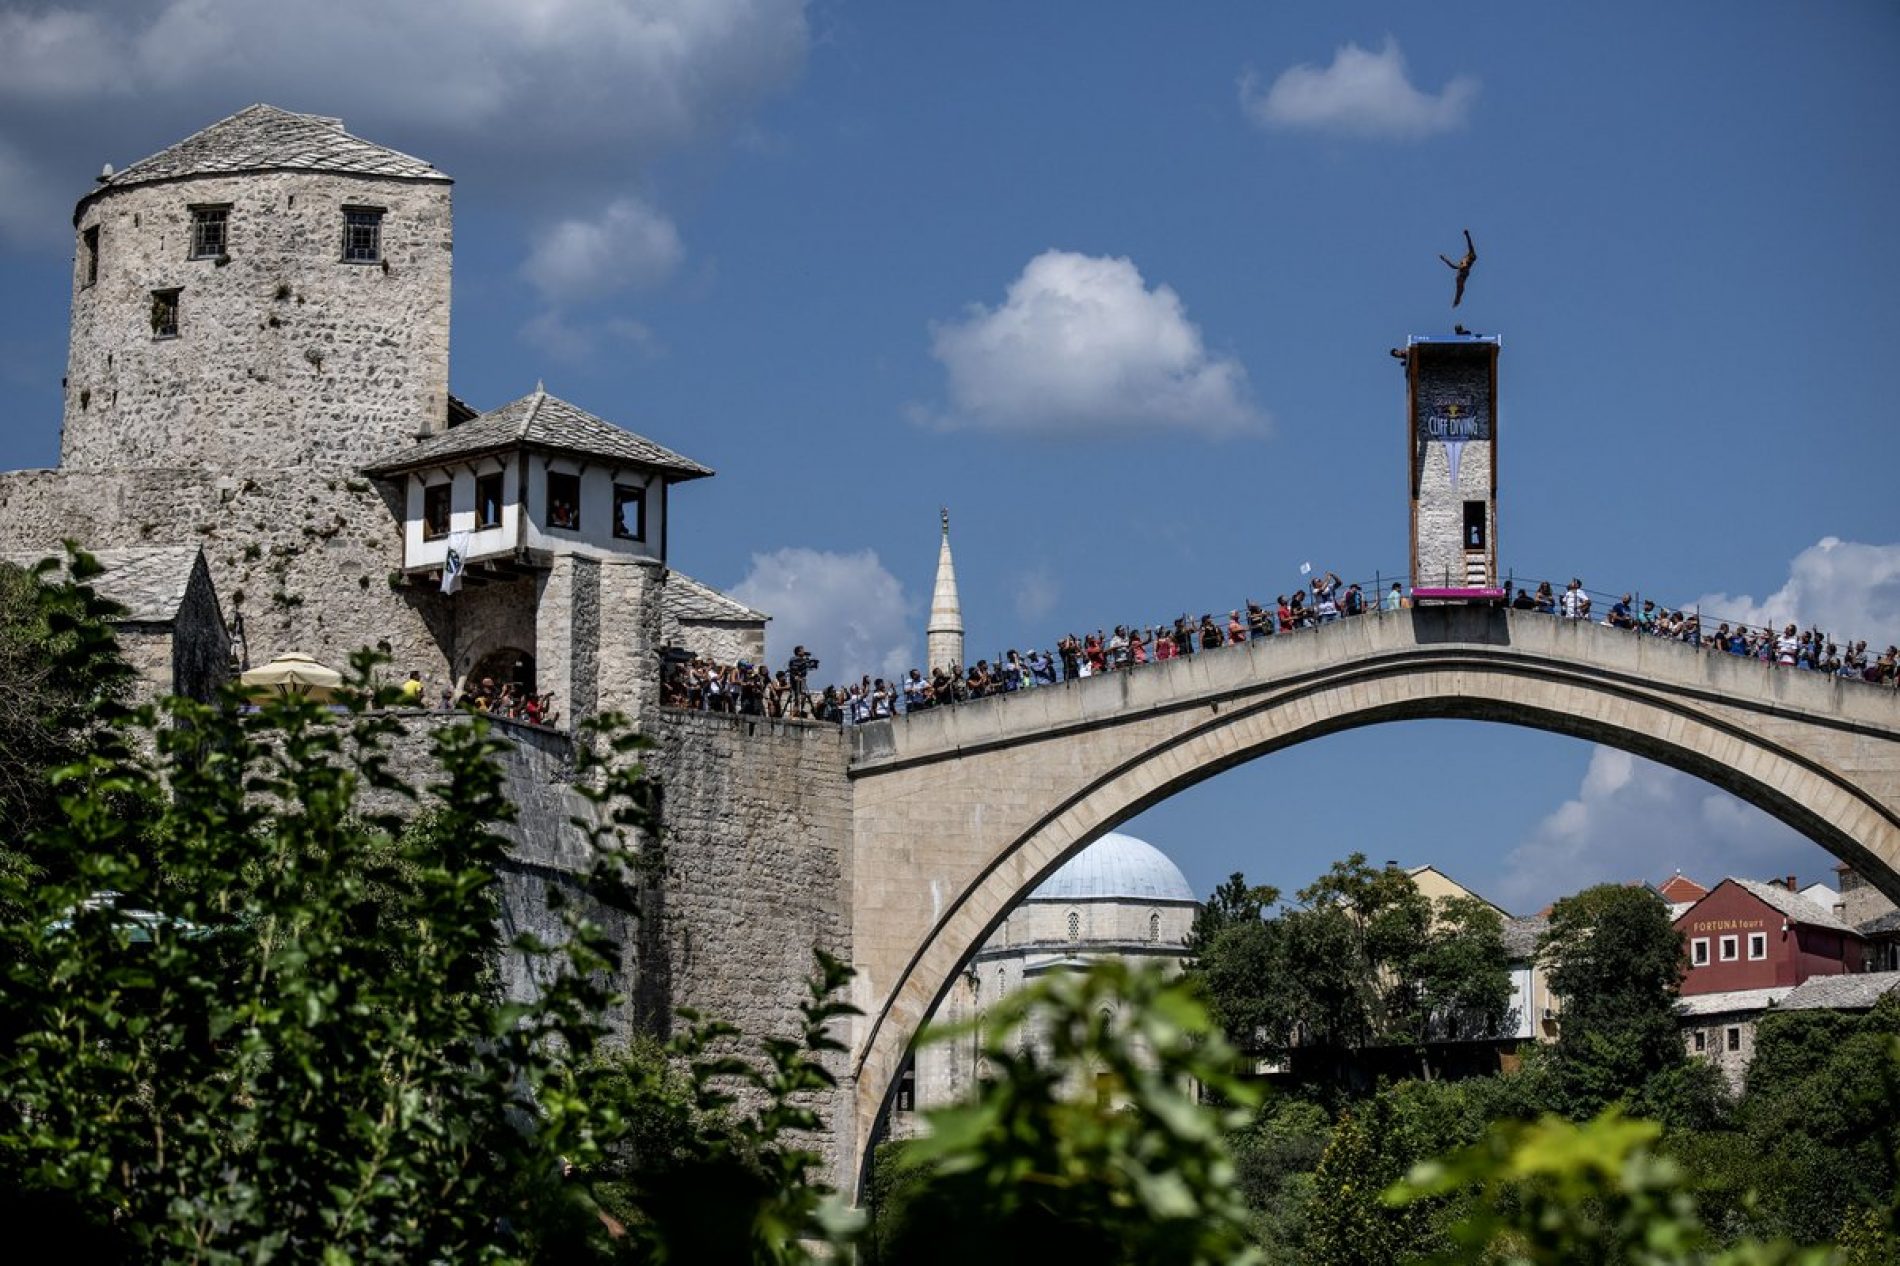 Red Bull Cliff Diving u Mostaru: Pobjednici Gary Hunt i Adriana Jimenez